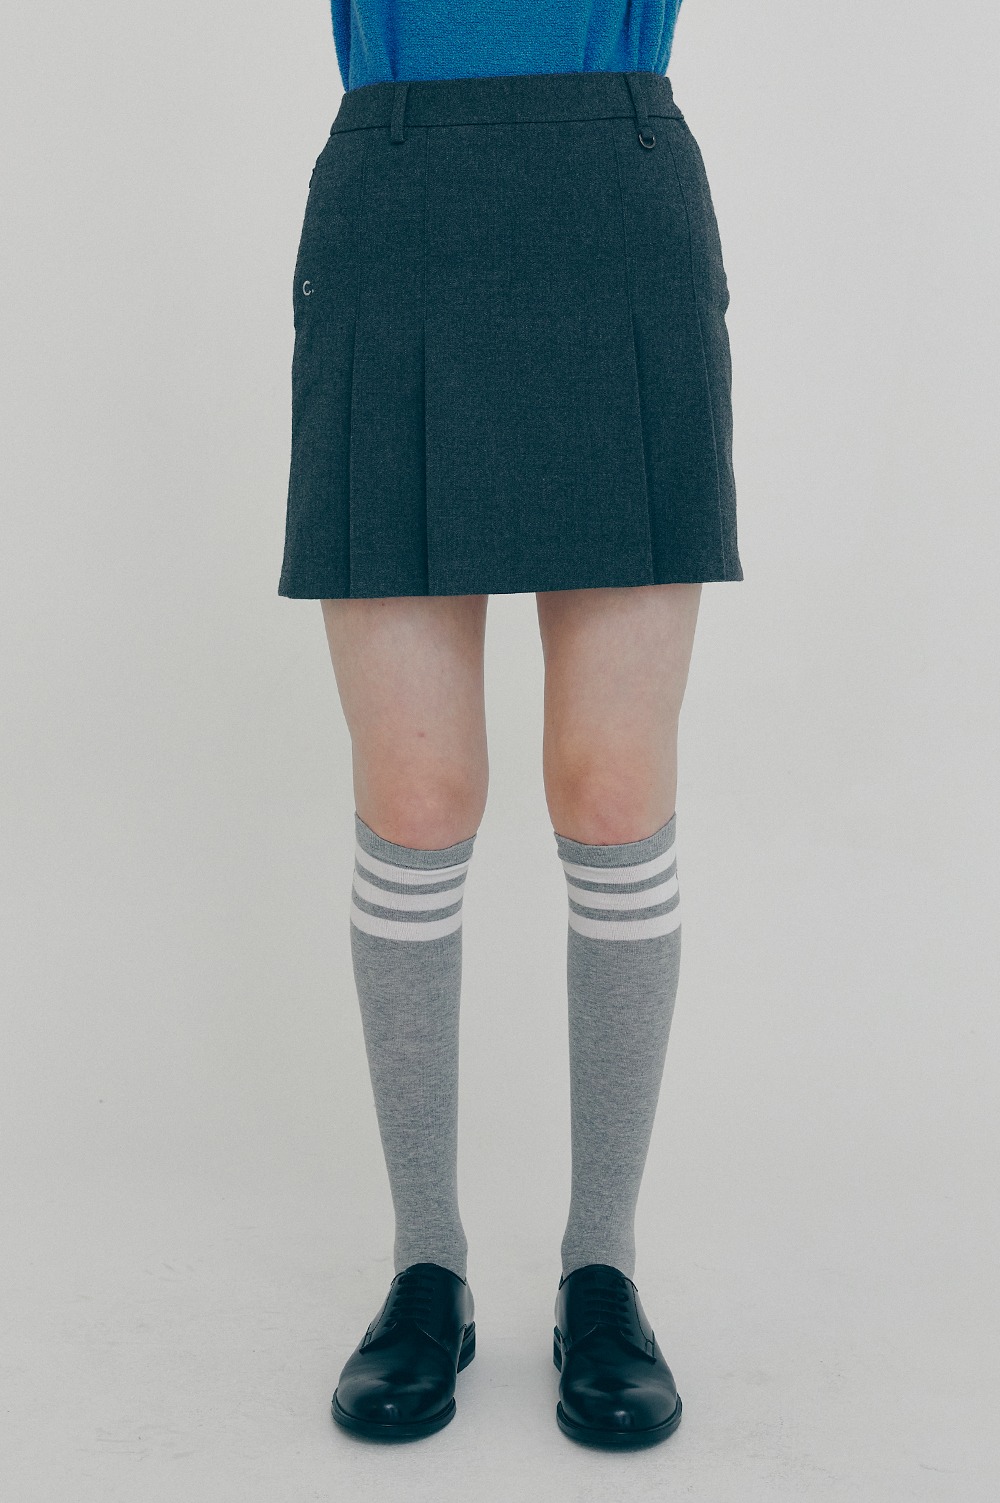 clove - [FW21 clove] Side Pleated Skirt (Charcoal)